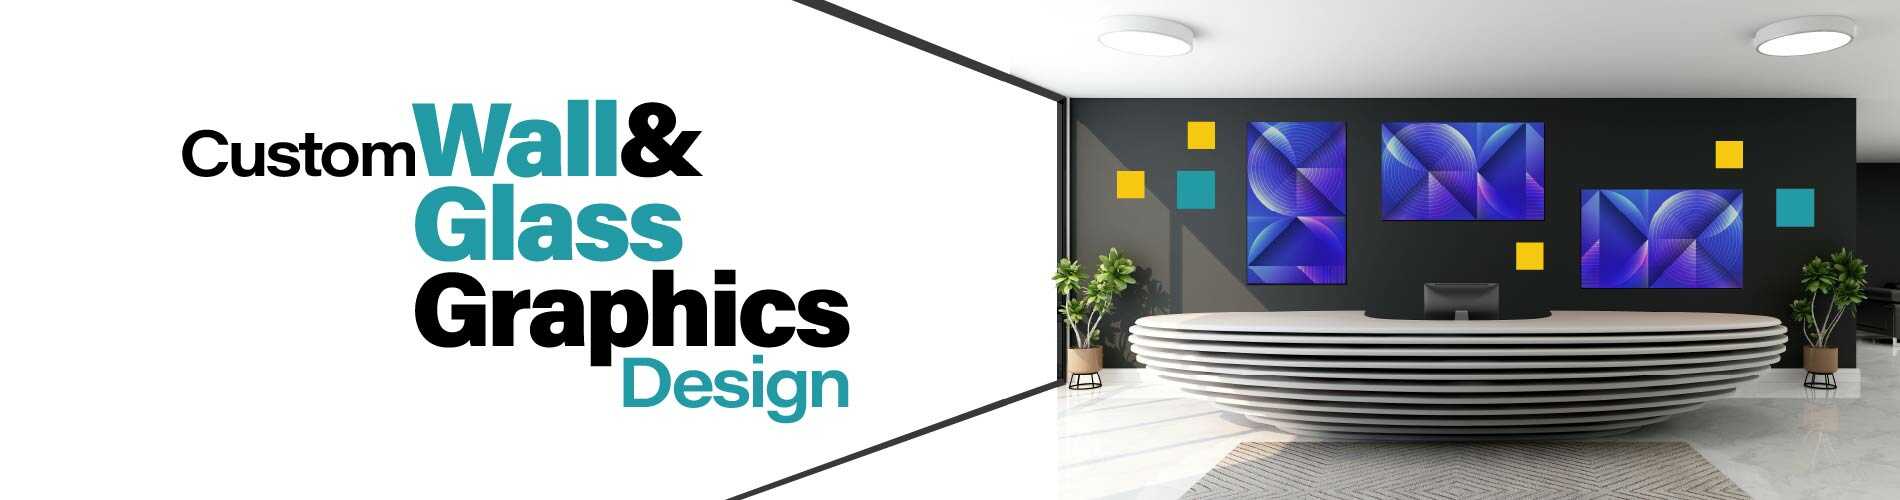 Top more than 140 graphic designer office interior best